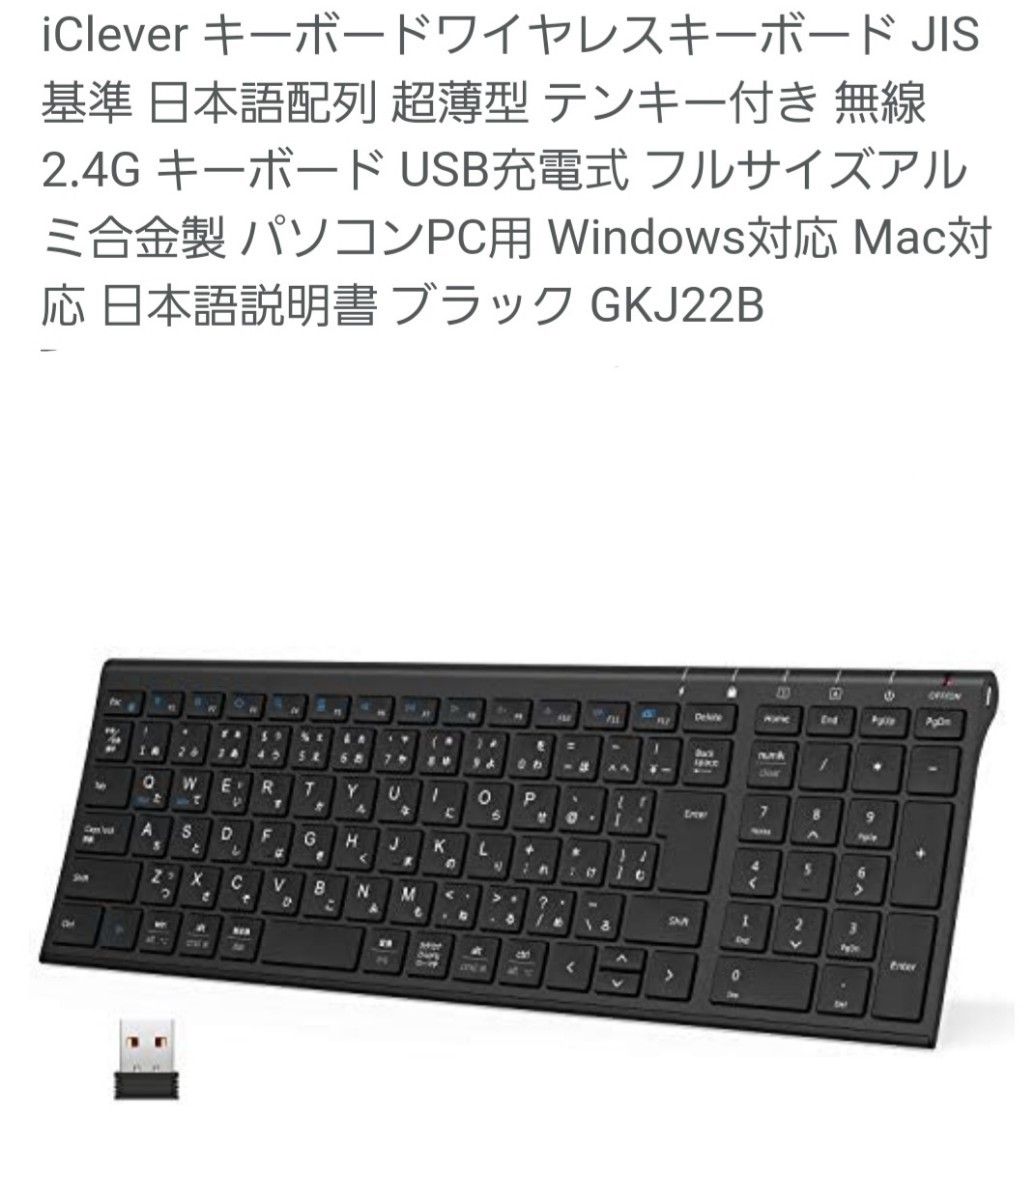 iCleverワイヤレスキーボード JIS基準 日本語配列 超薄型 テンキー付 無線 2.4G USB充電式  GKJ22B